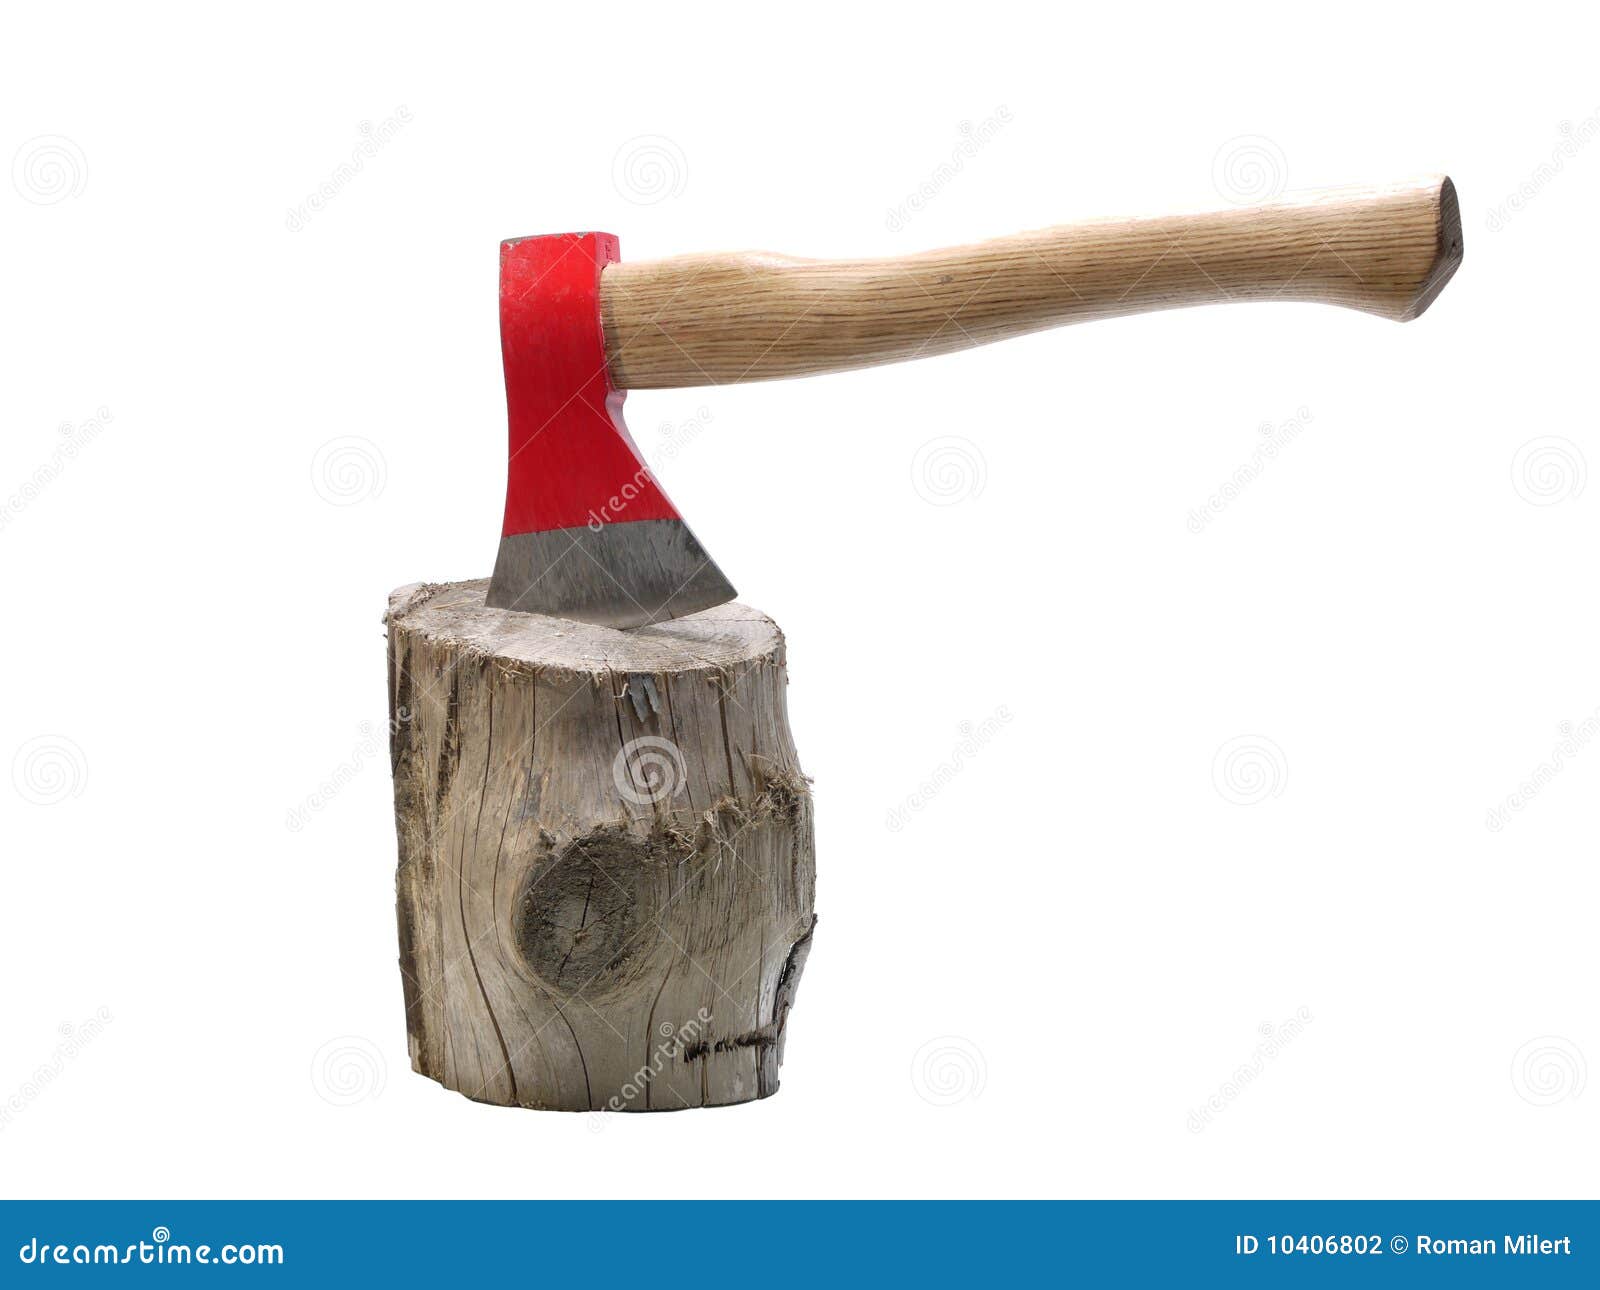 axe on chopping block